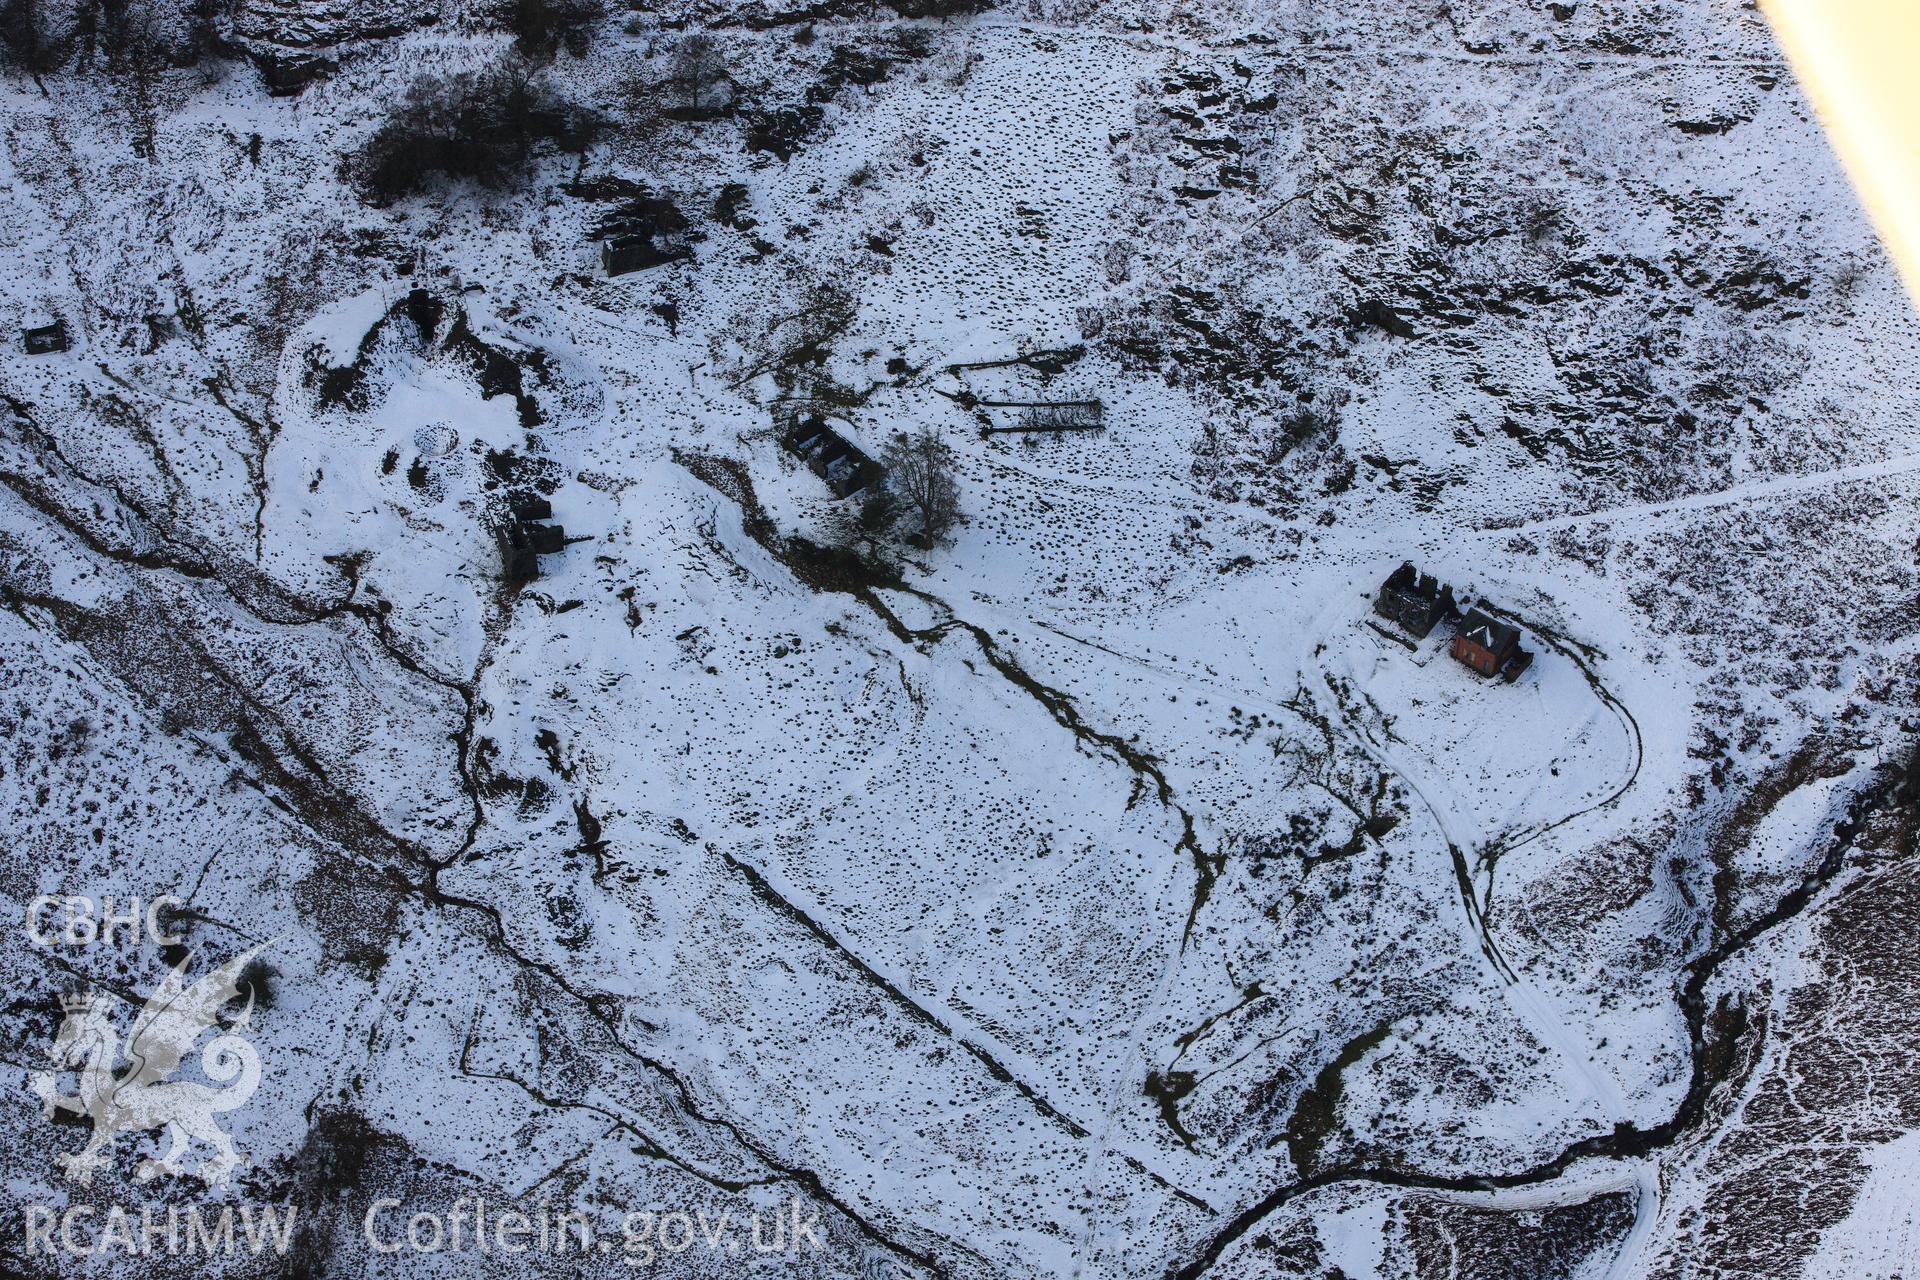 RCAHMW colour oblique photograph of Cwm Elan mine, under snow. Taken by Toby Driver on 18/12/2011.